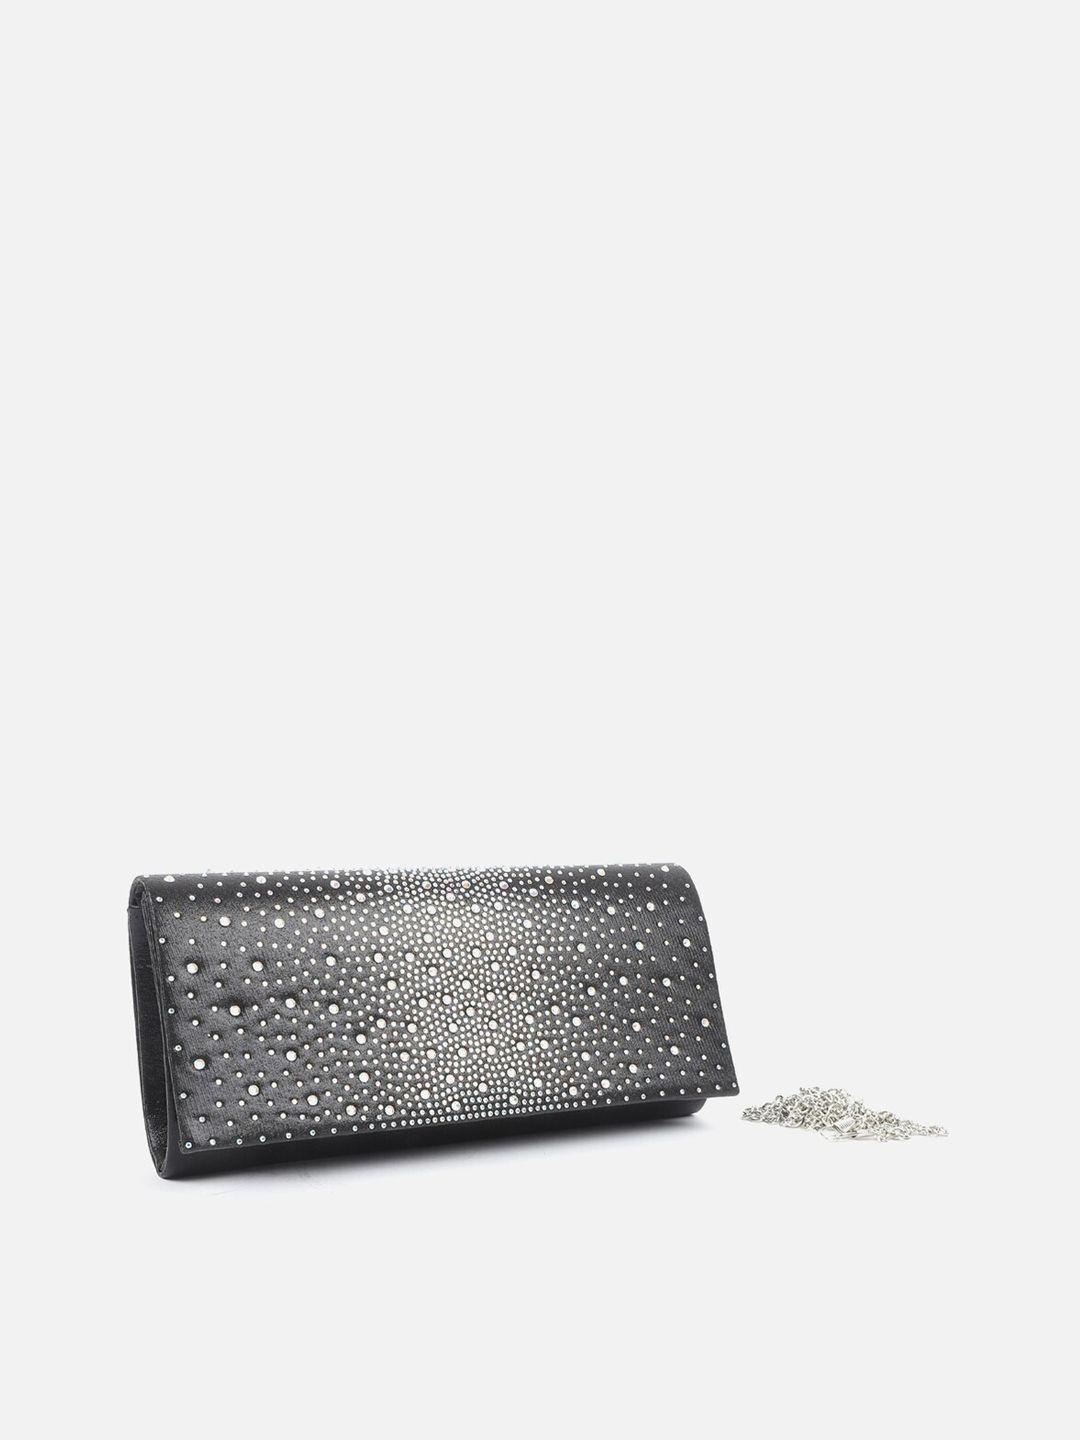 carlton london self design purse with detachable sling